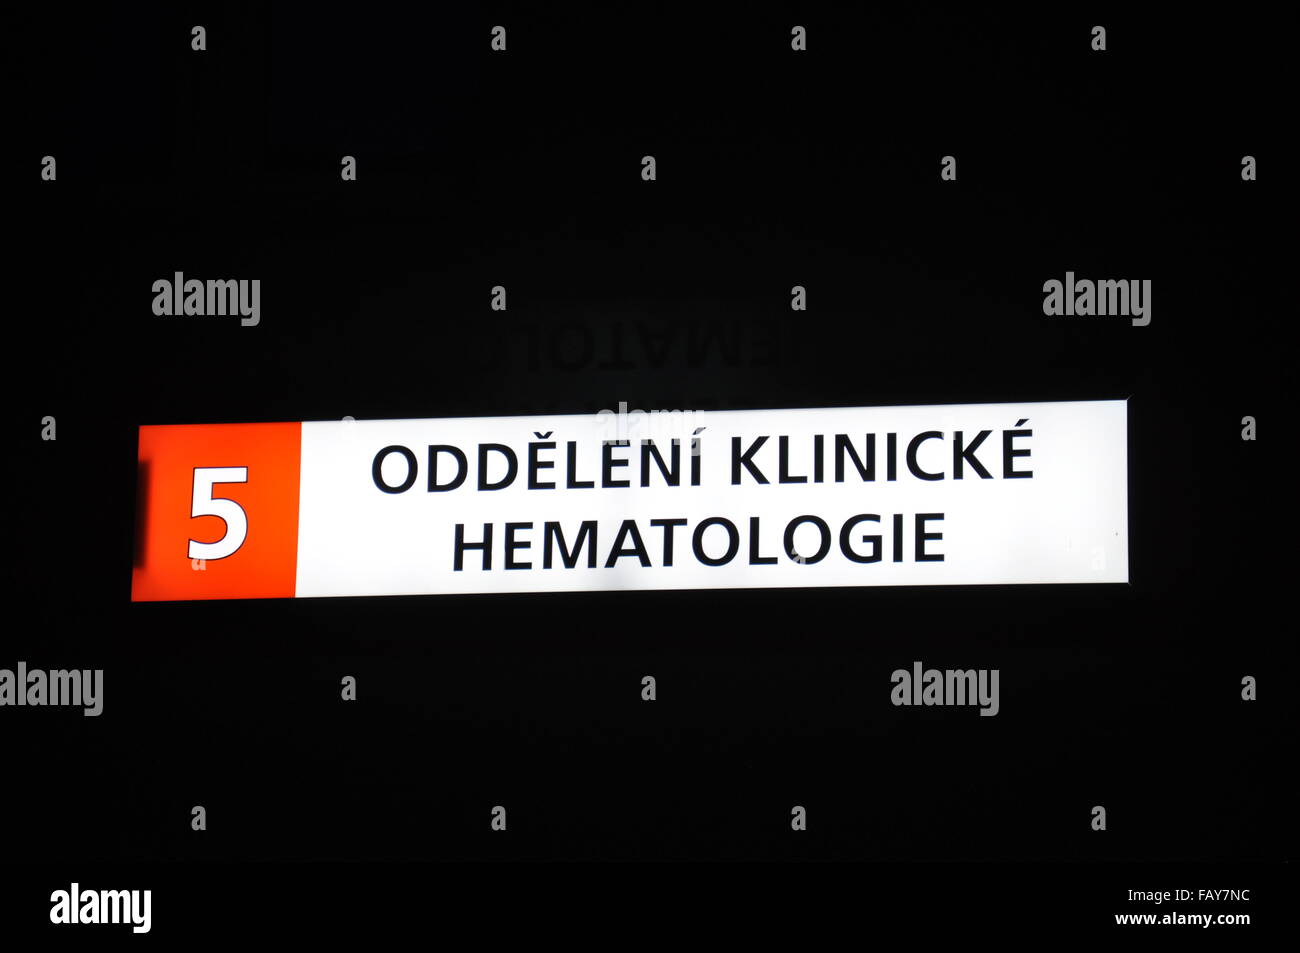 Department of Hematology, Hospital Pardubice, sign Stock Photo